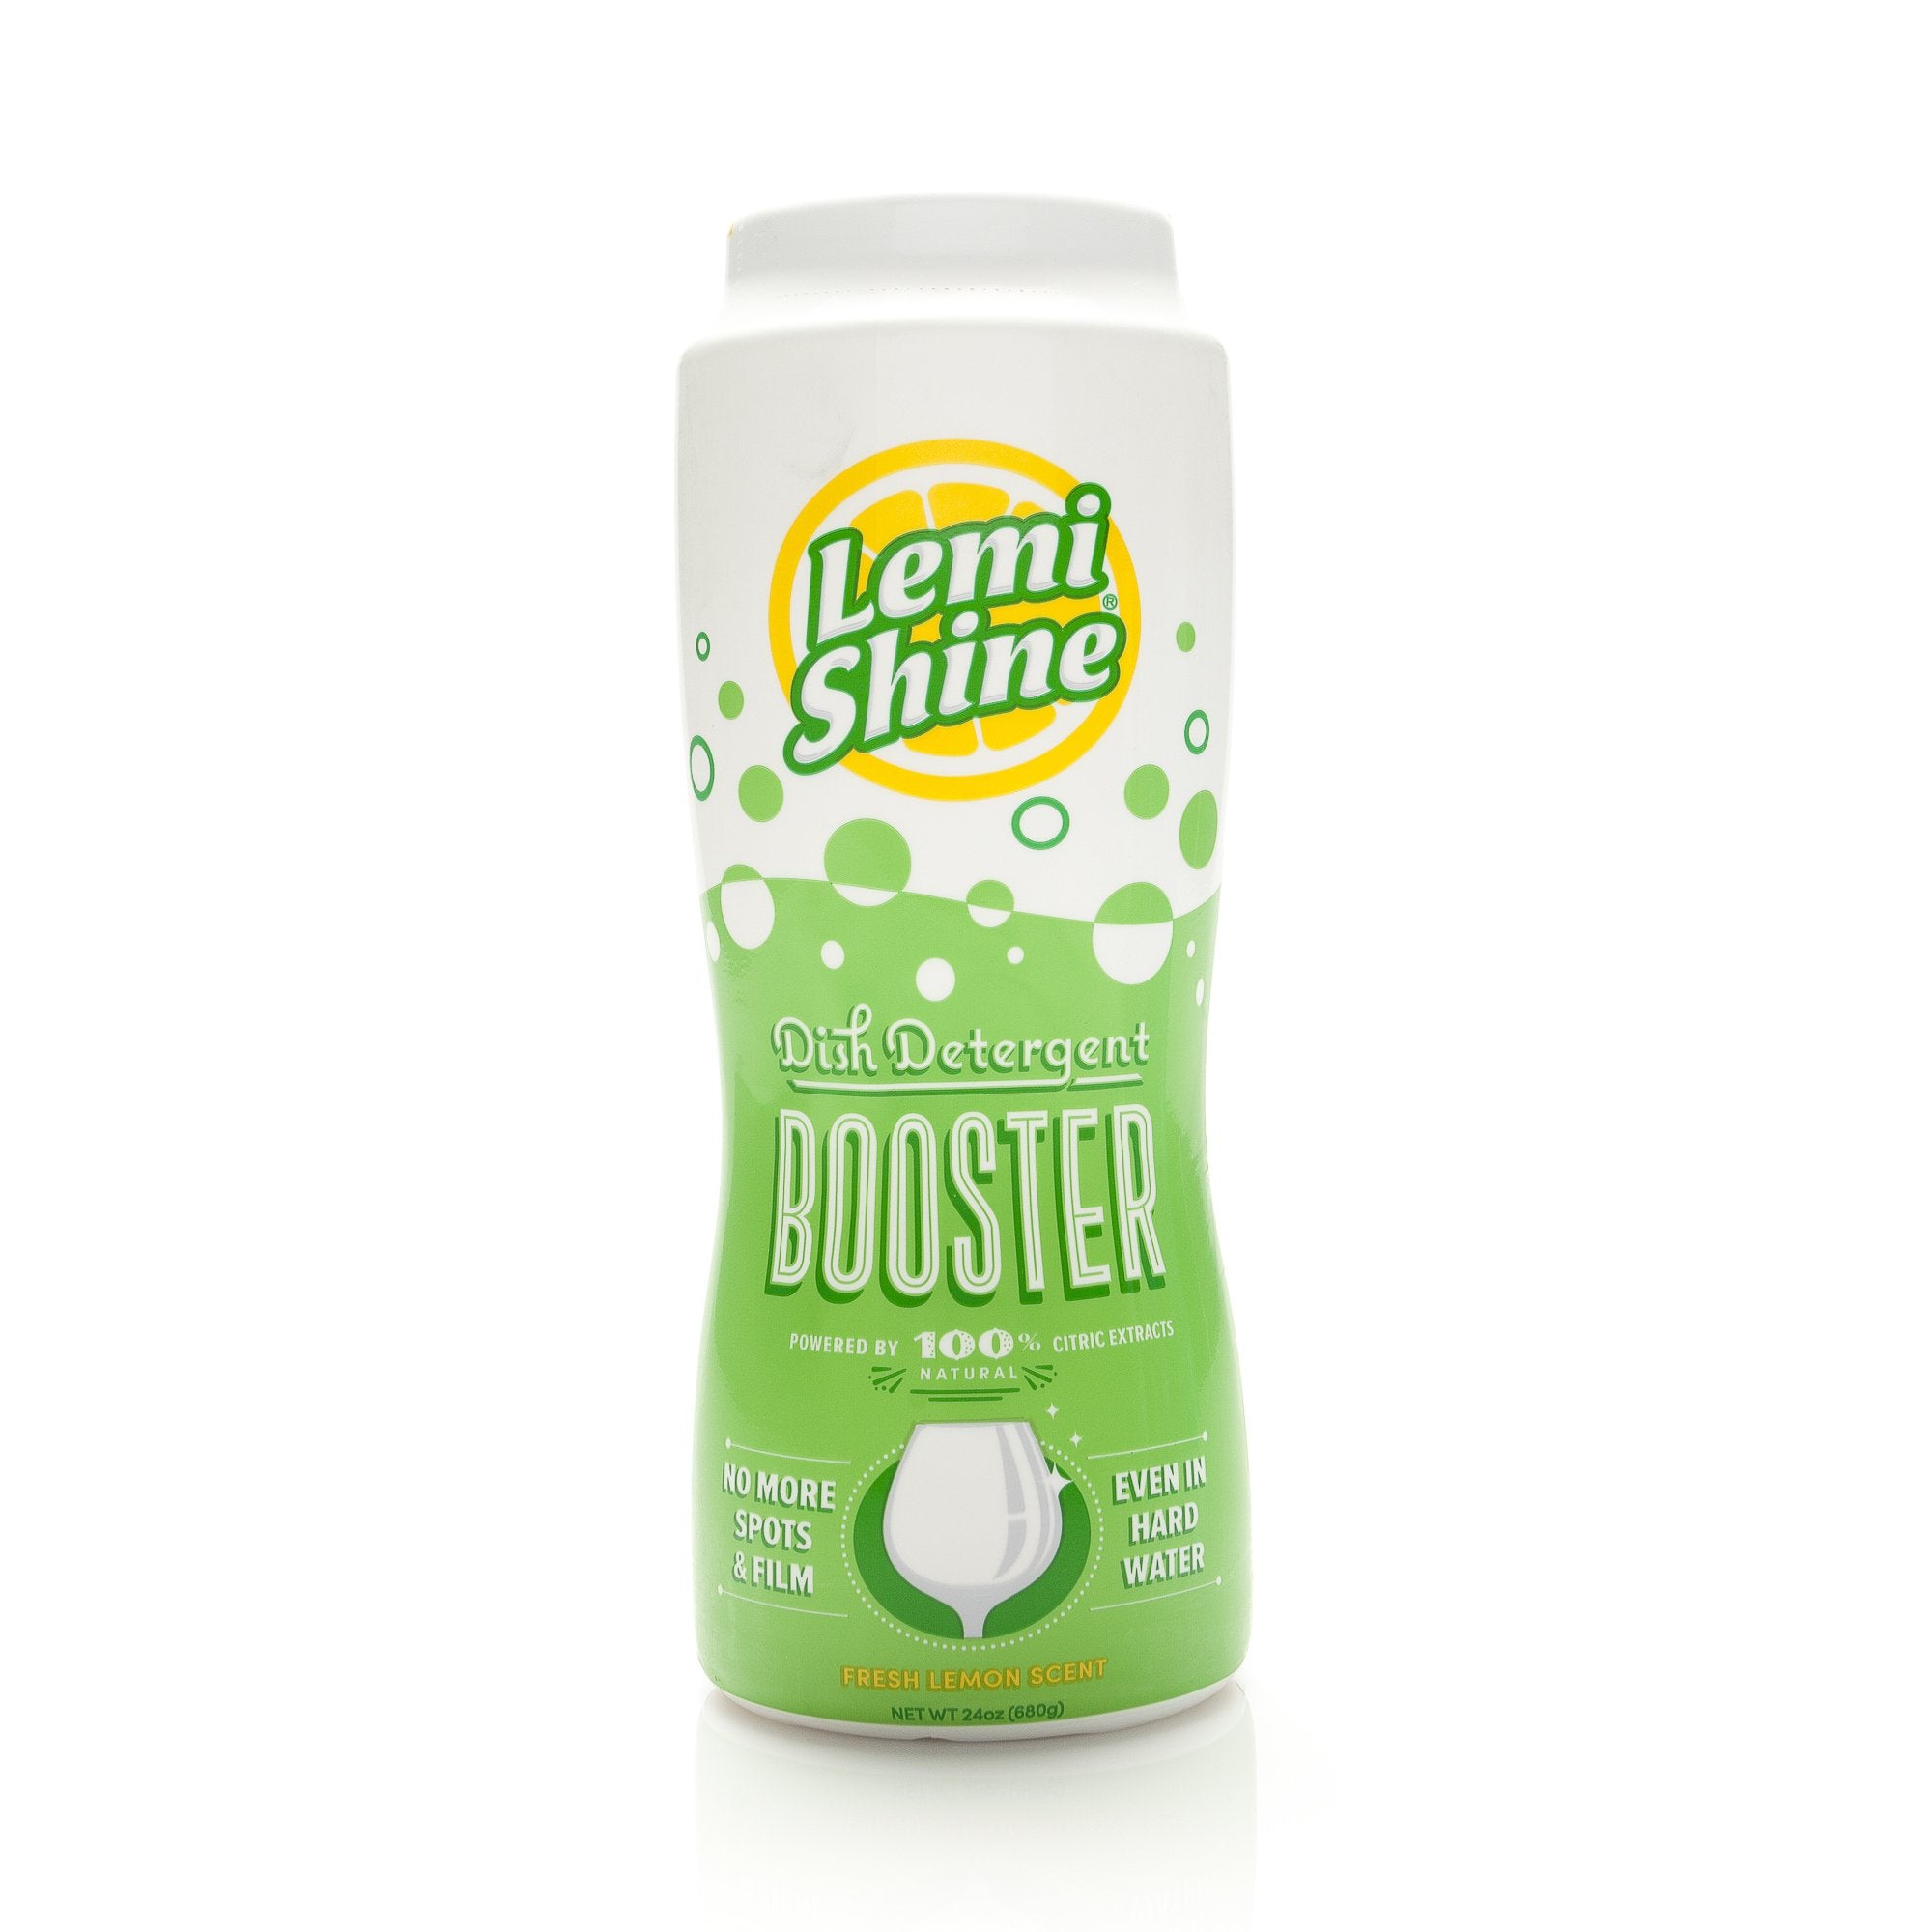 Lemi shine Dish Detergent Booster 20 oz.